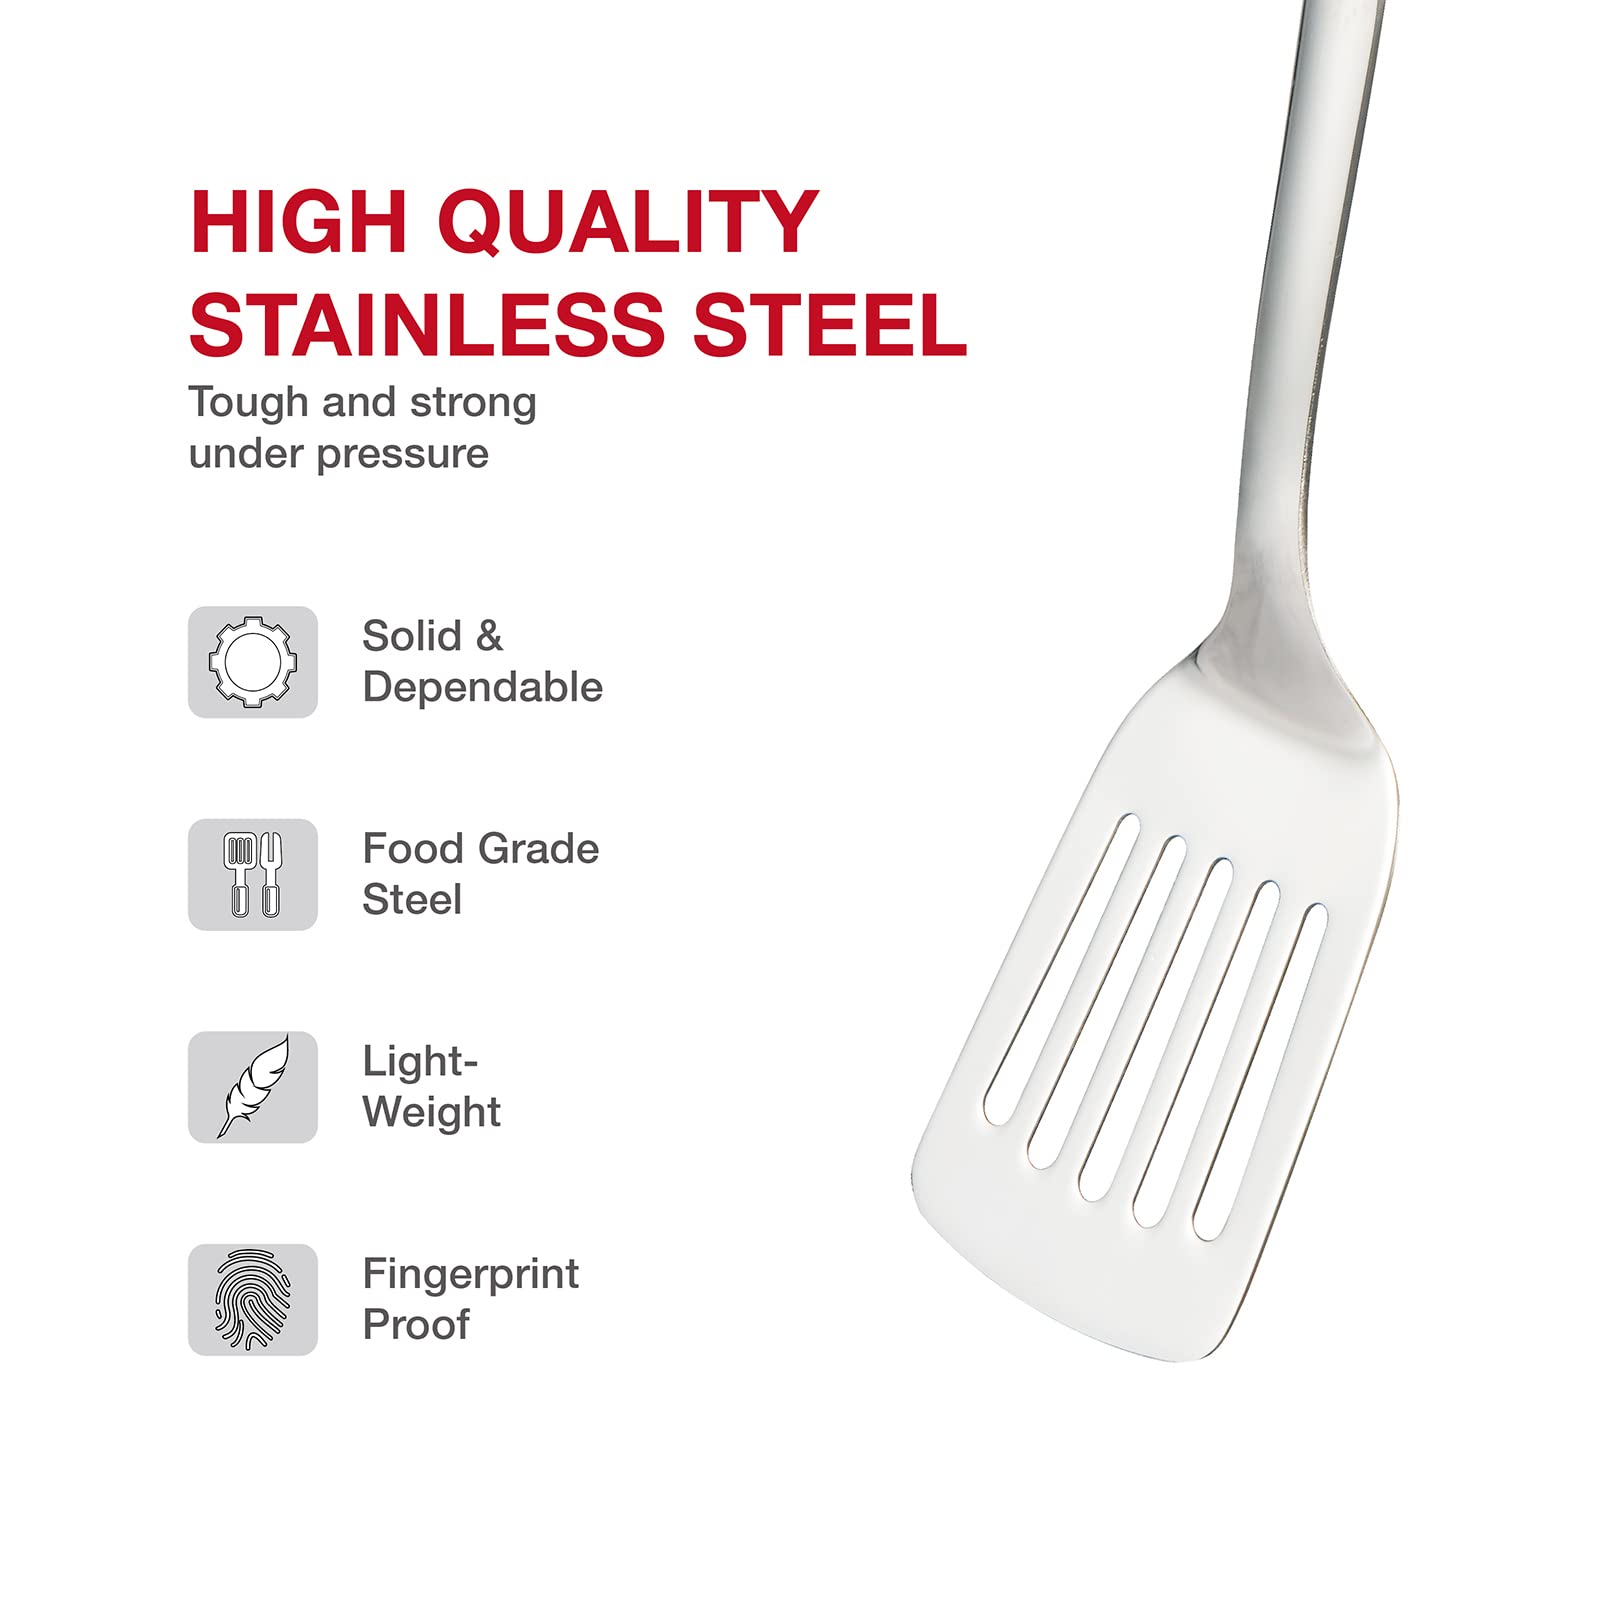 5 Piece Stainless Steel Utensil & Kitchen Tool Set by ZUCCOR